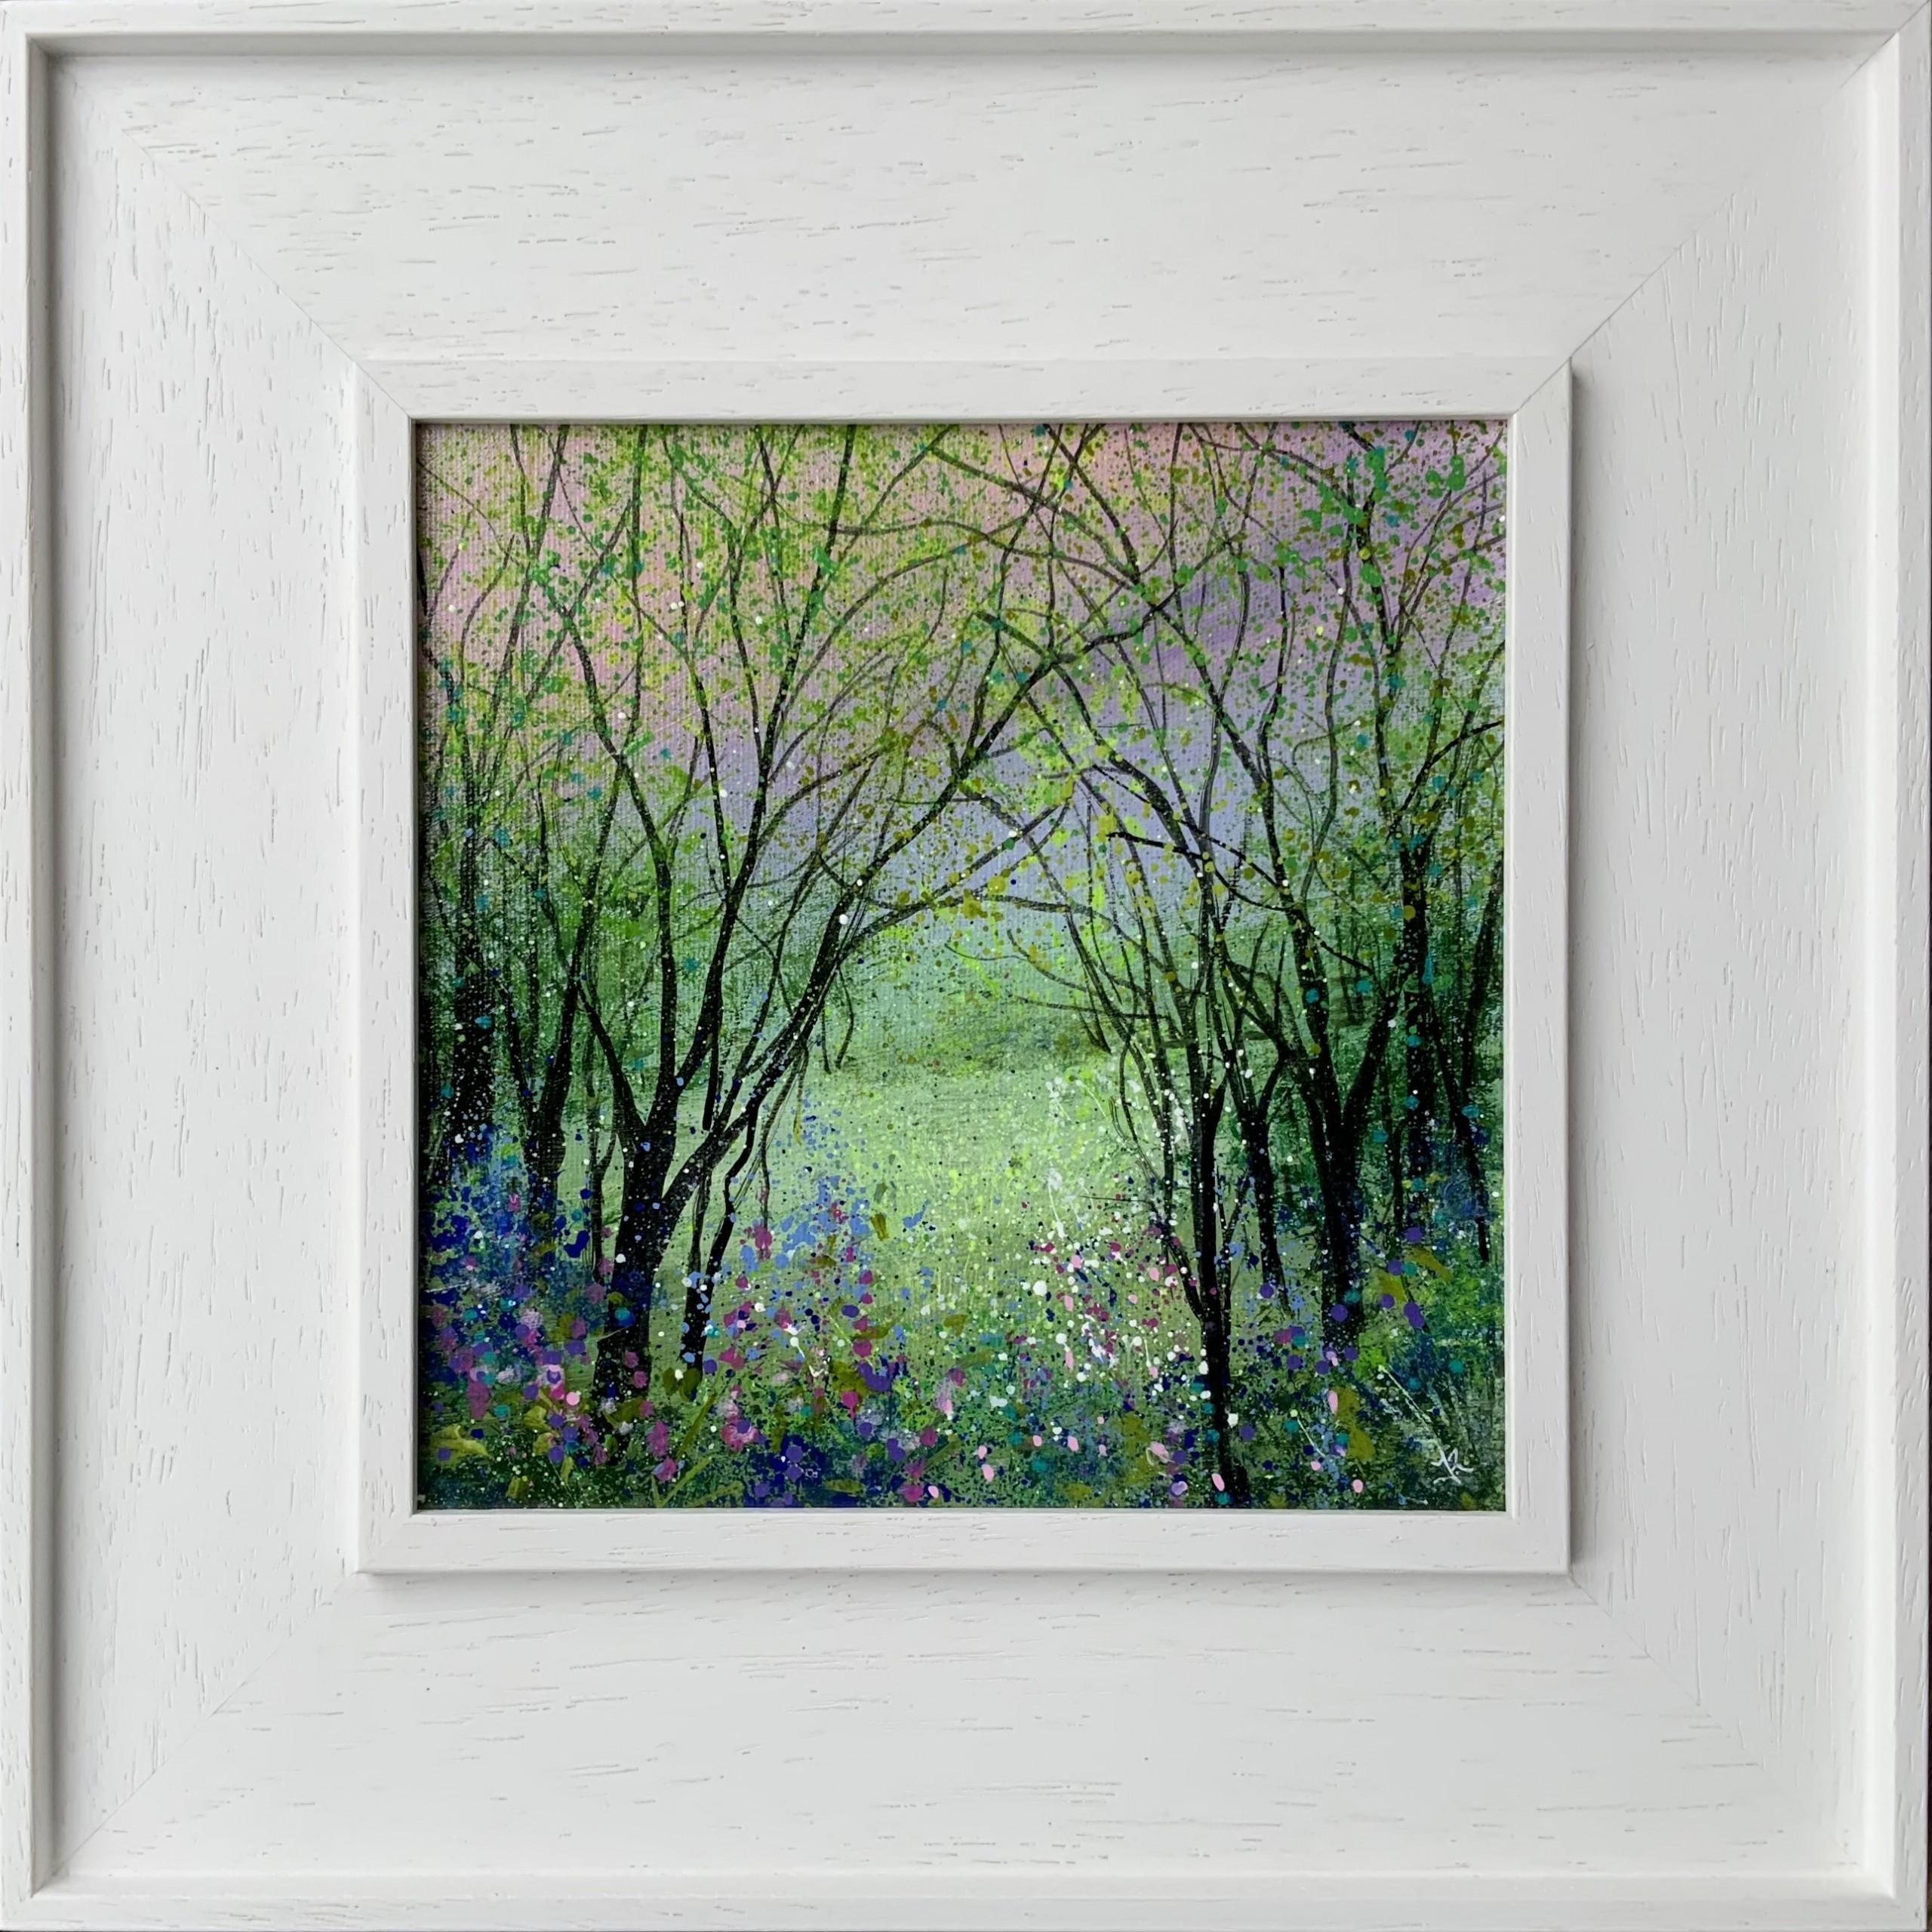 Jan Rogers Landscape Painting - Enchanted Bluebells, floral art, nature art, affordable art, original art